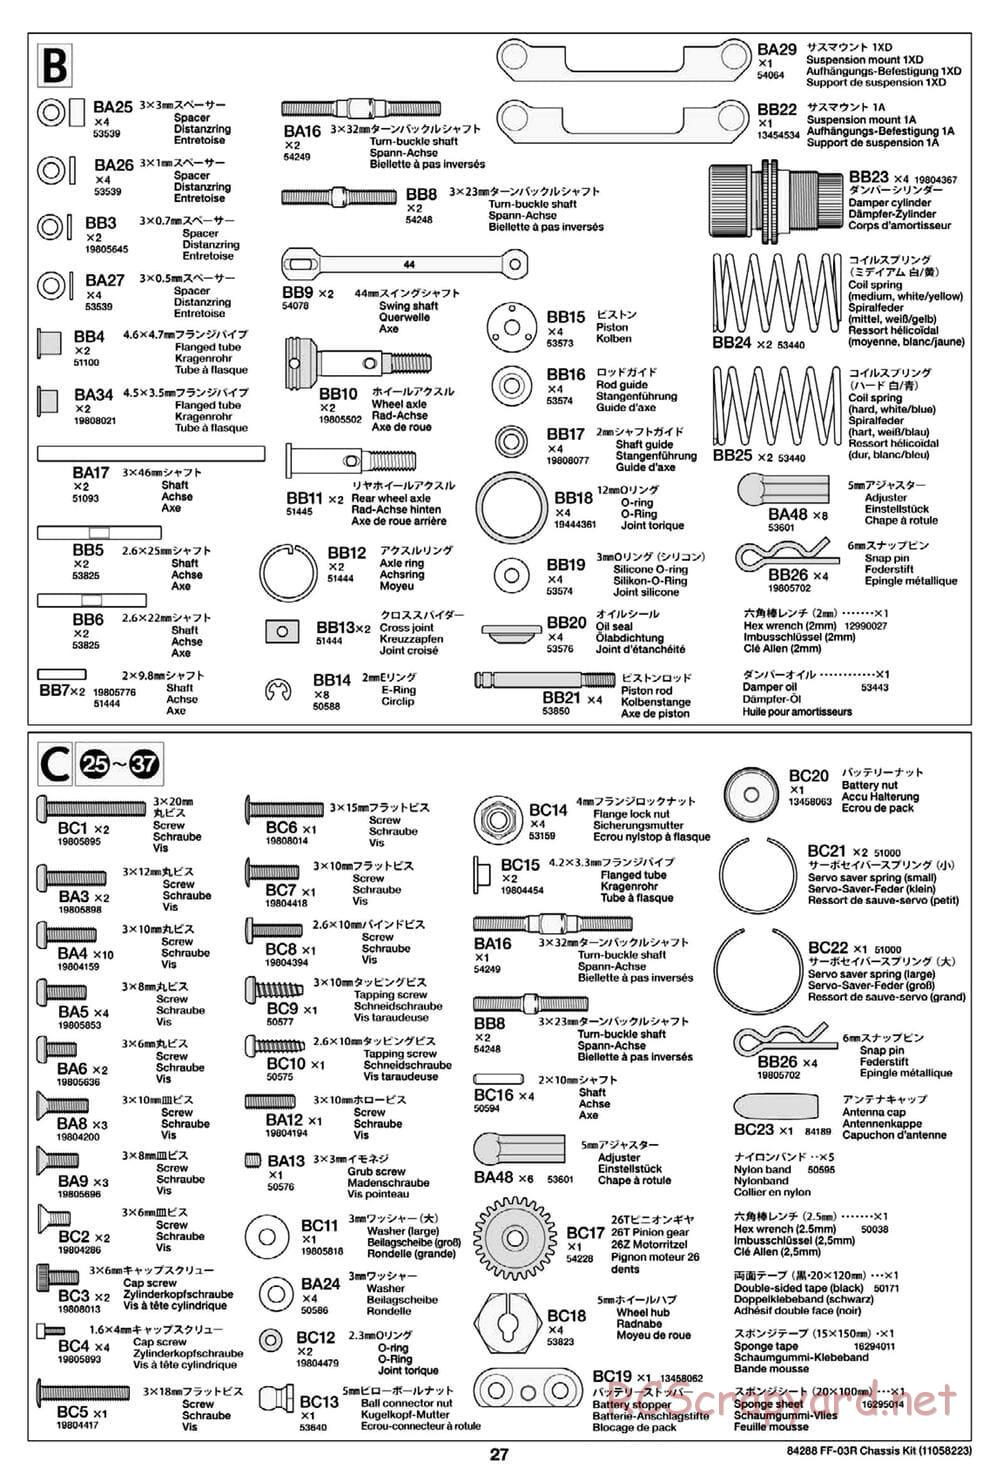 Tamiya - FF-03R Chassis - Manual - Page 29